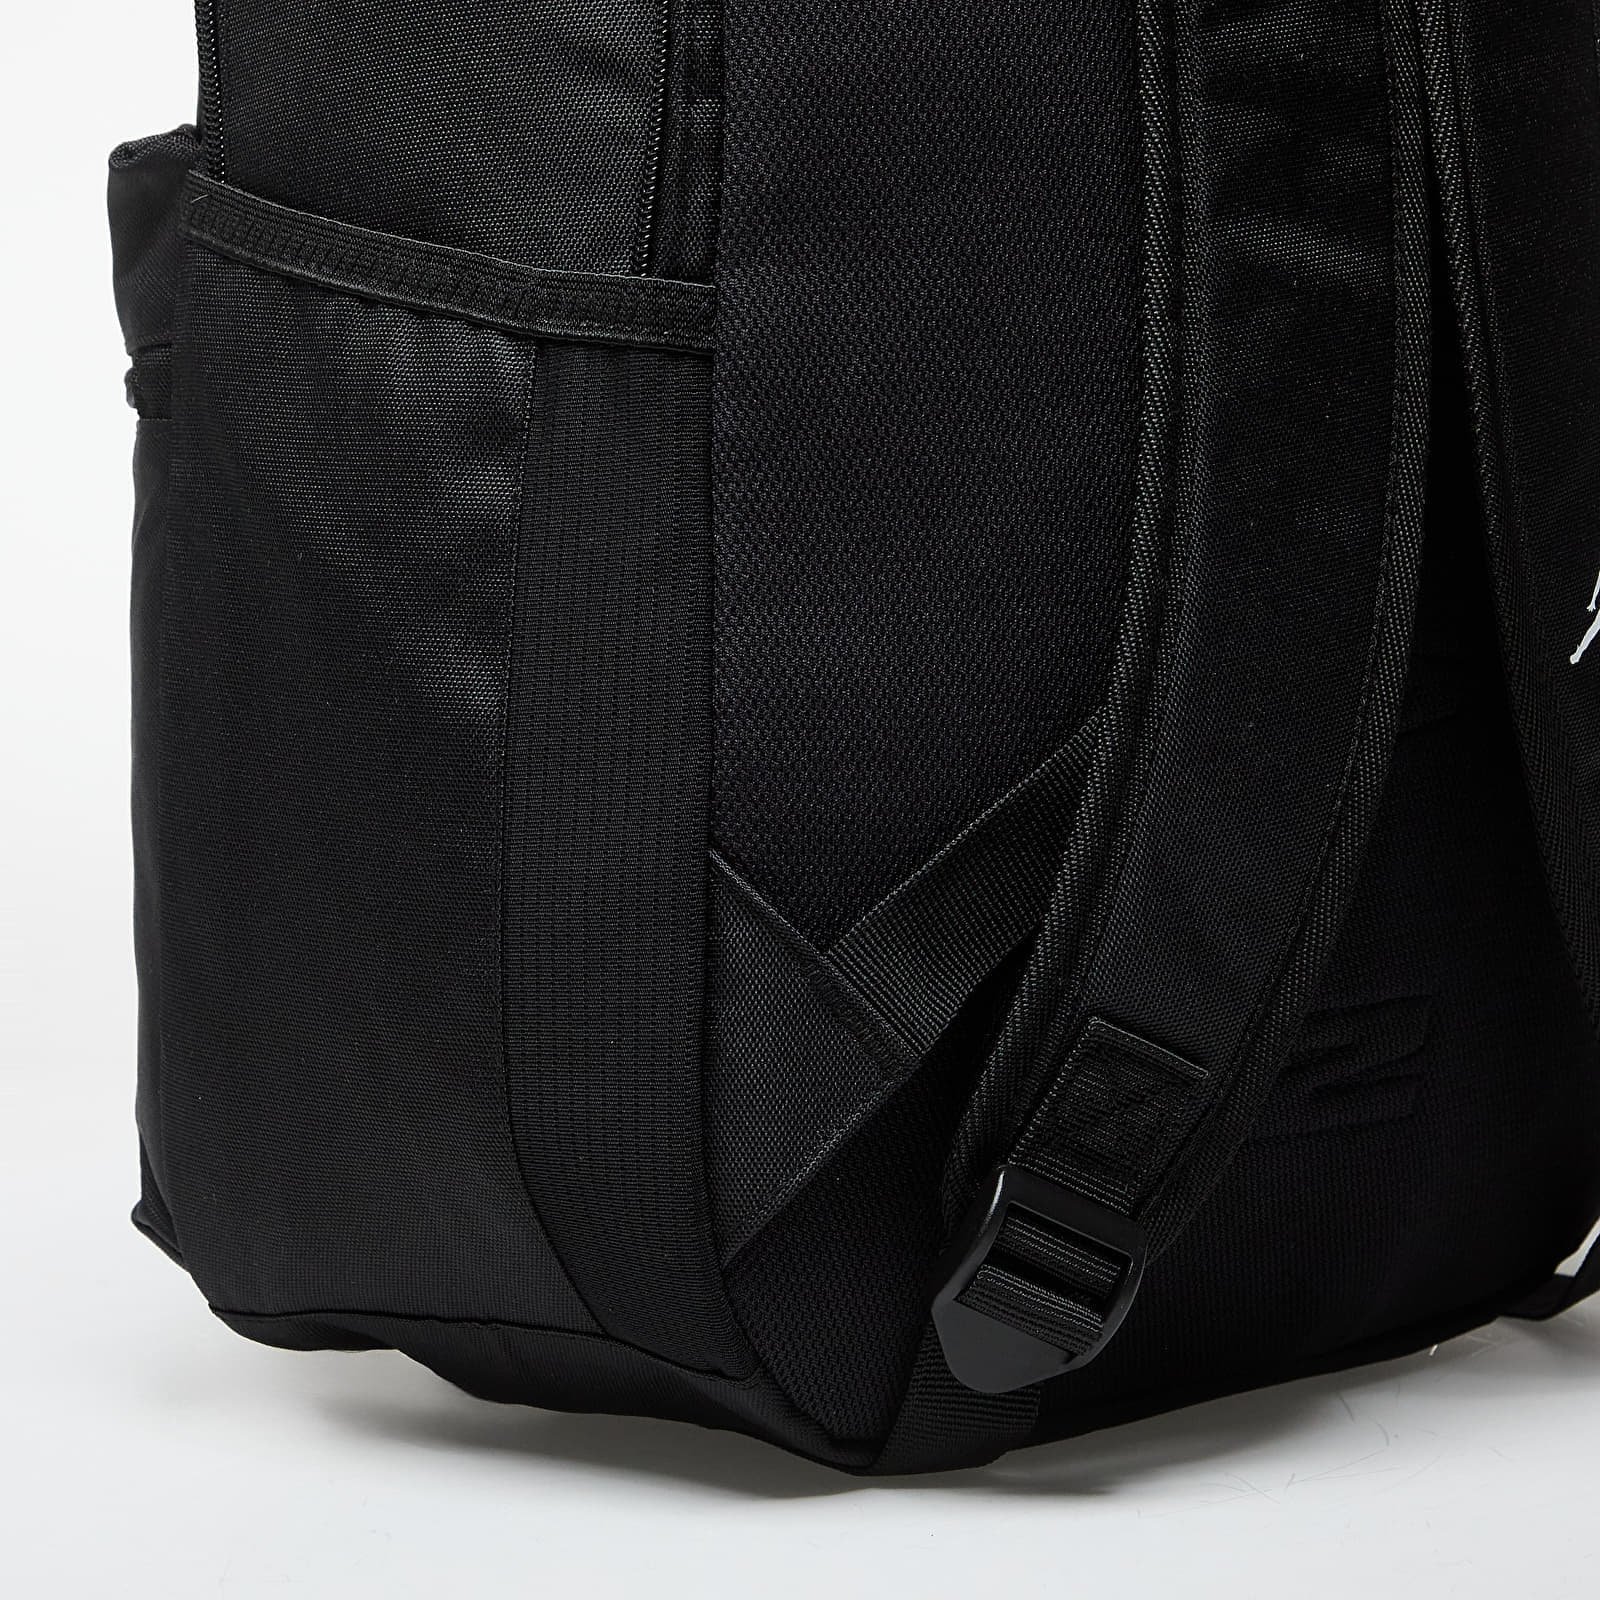 Jordan Backpack Black 27 l